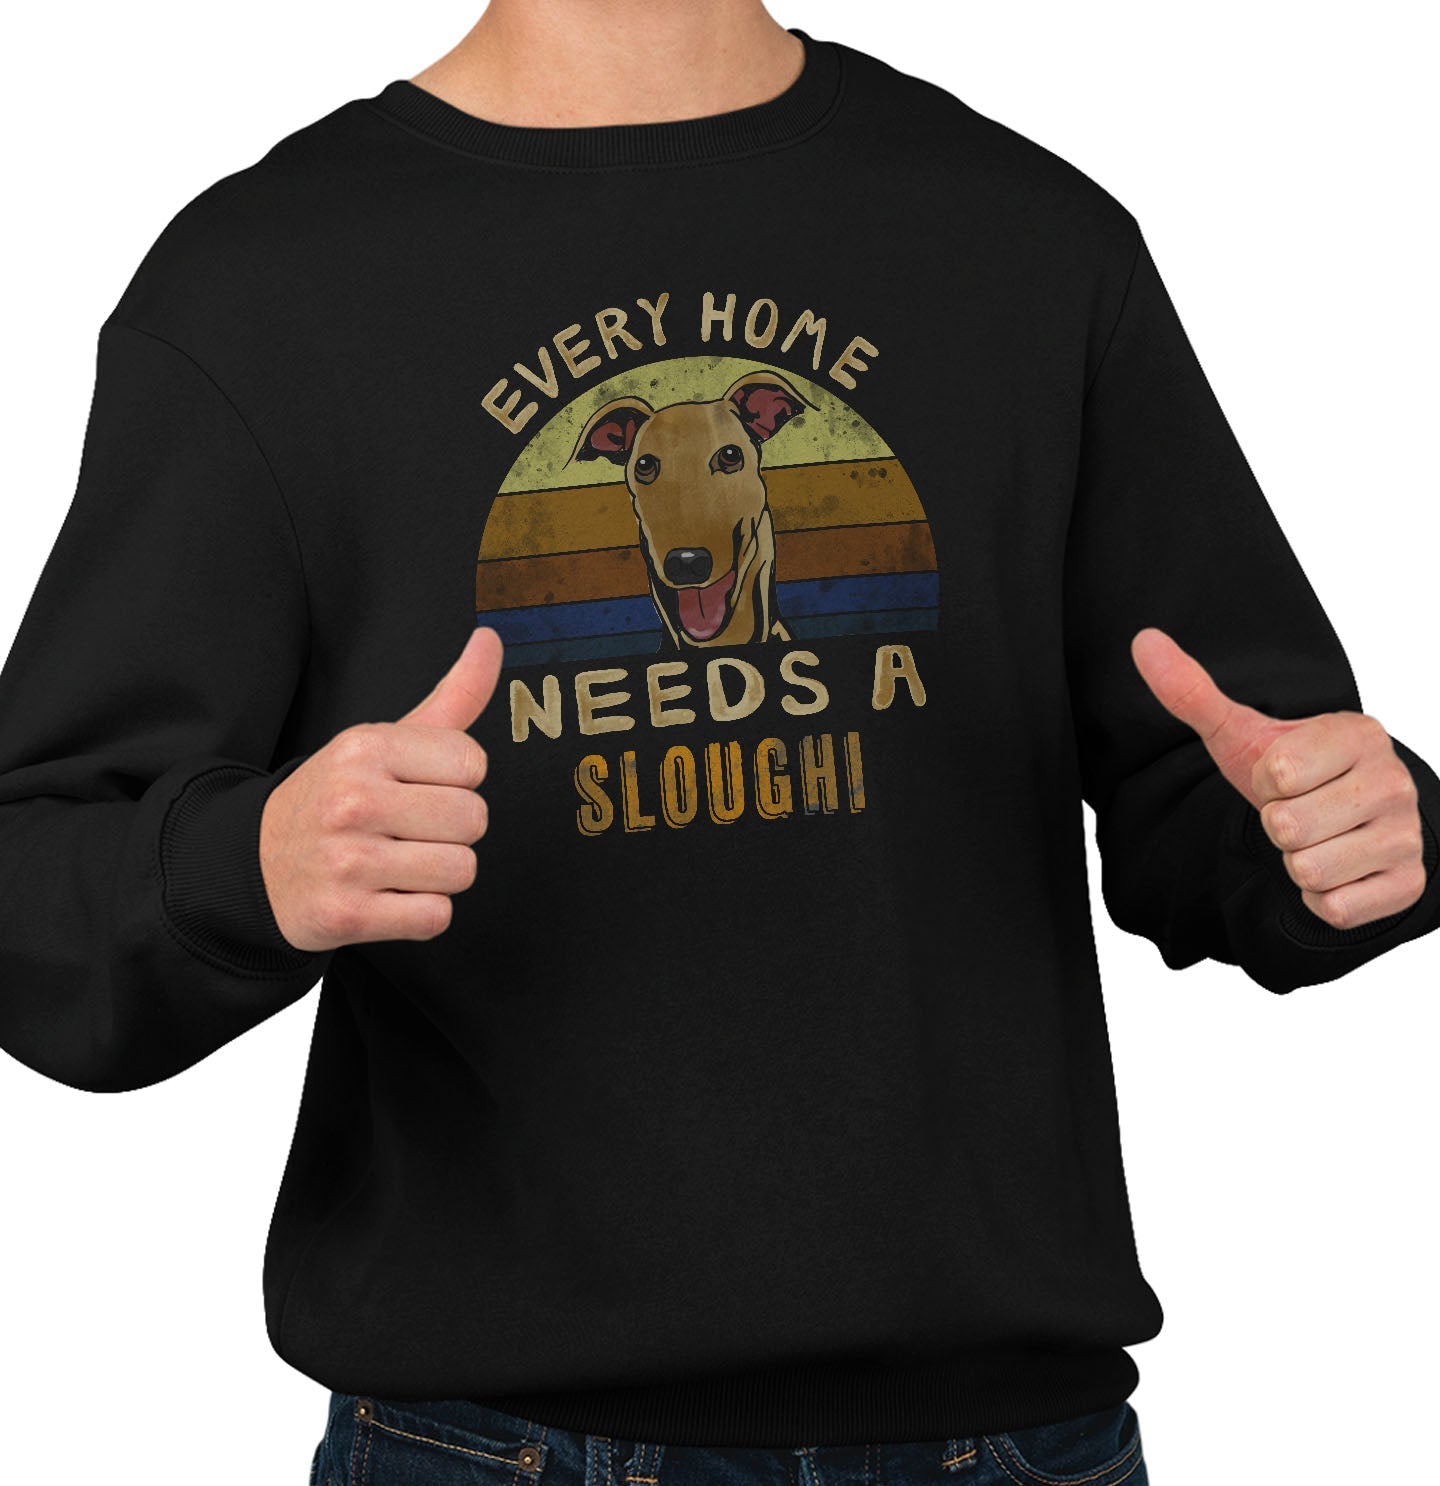 Every Home Needs a Sloughi - Adult Unisex Crewneck Sweatshirt